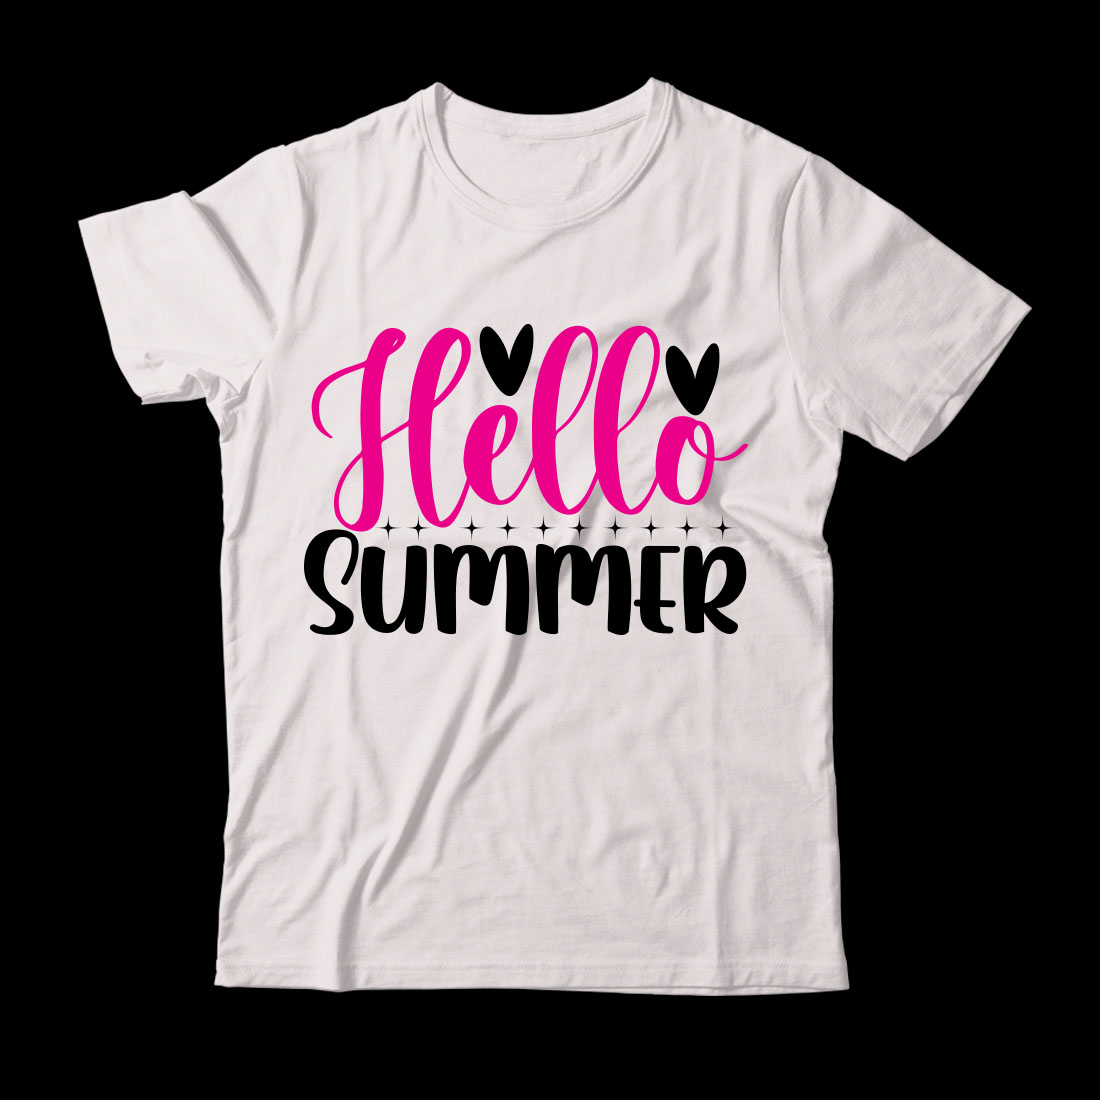 White t - shirt that says hello summer.